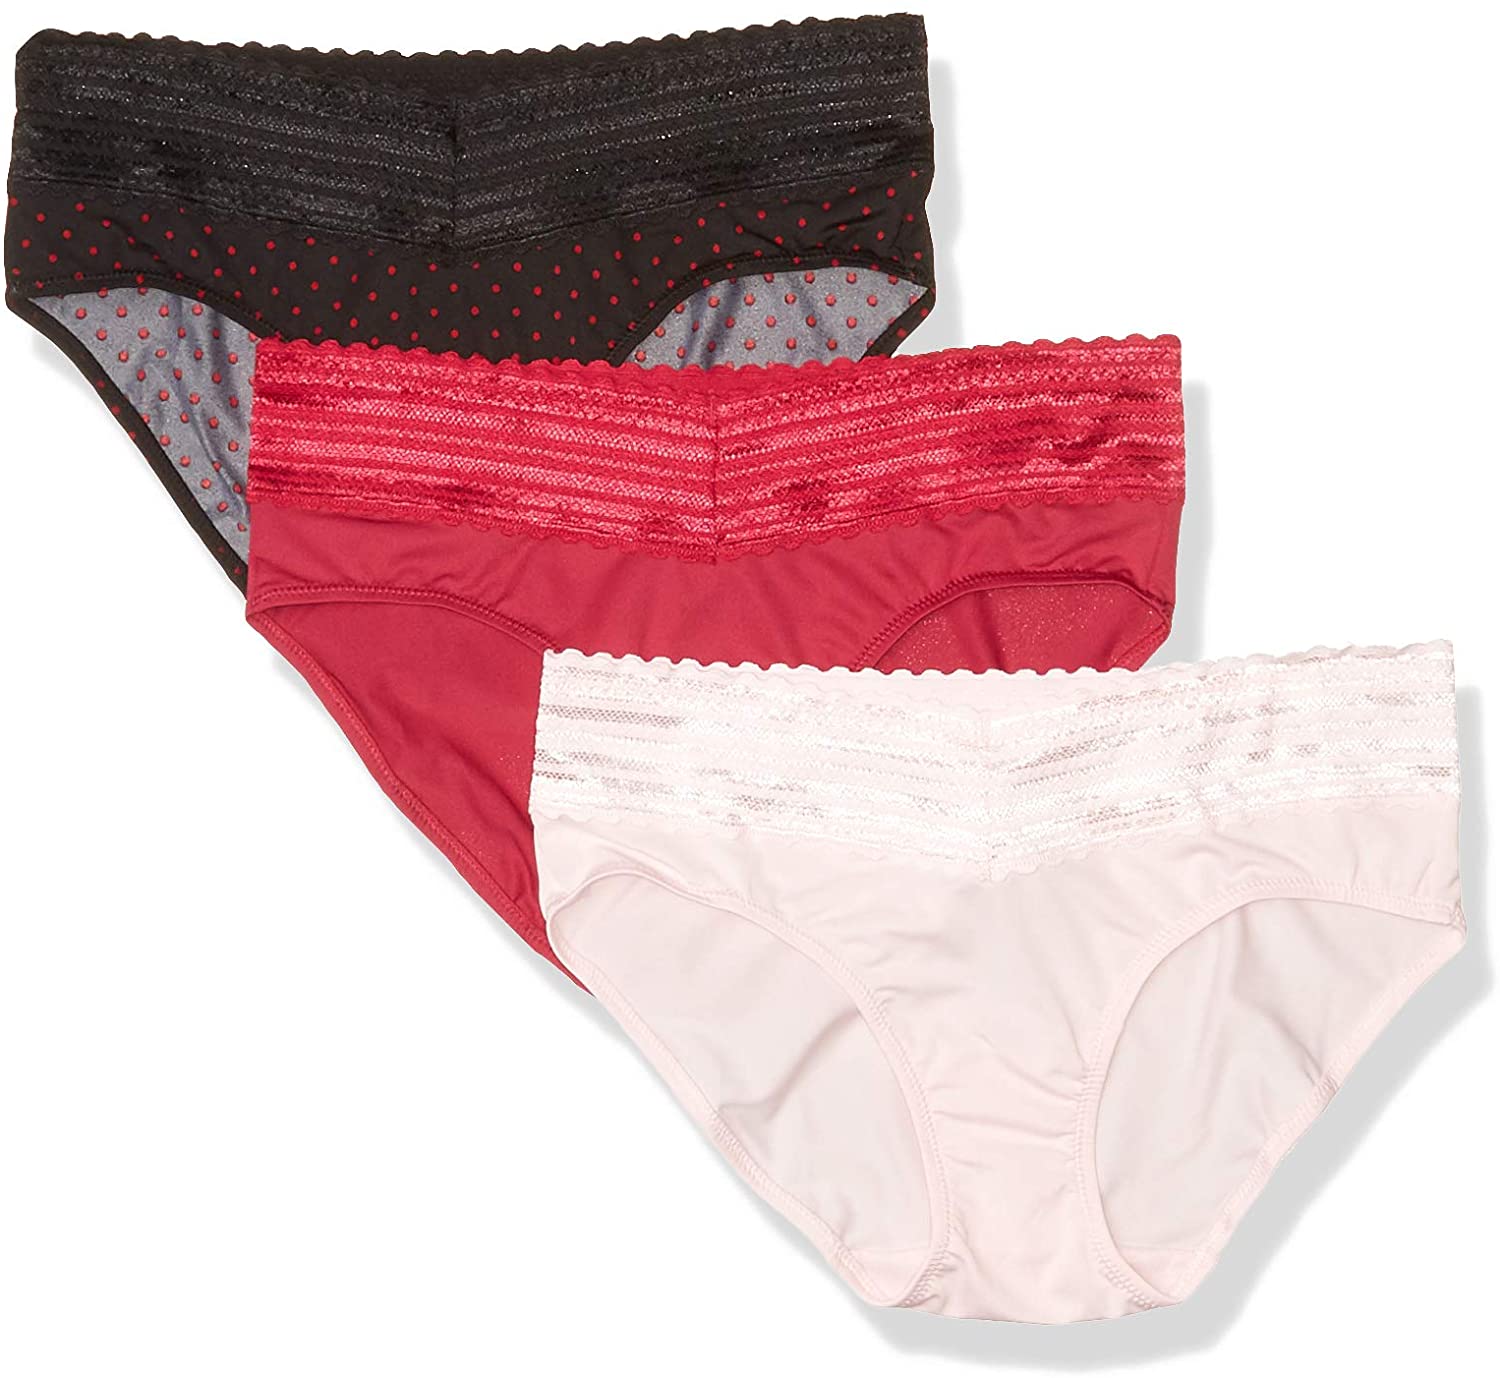 Buy Warner'swomens Blissful Benefits No Muffin 3 Pack Hipster Panties  Online at desertcartIreland